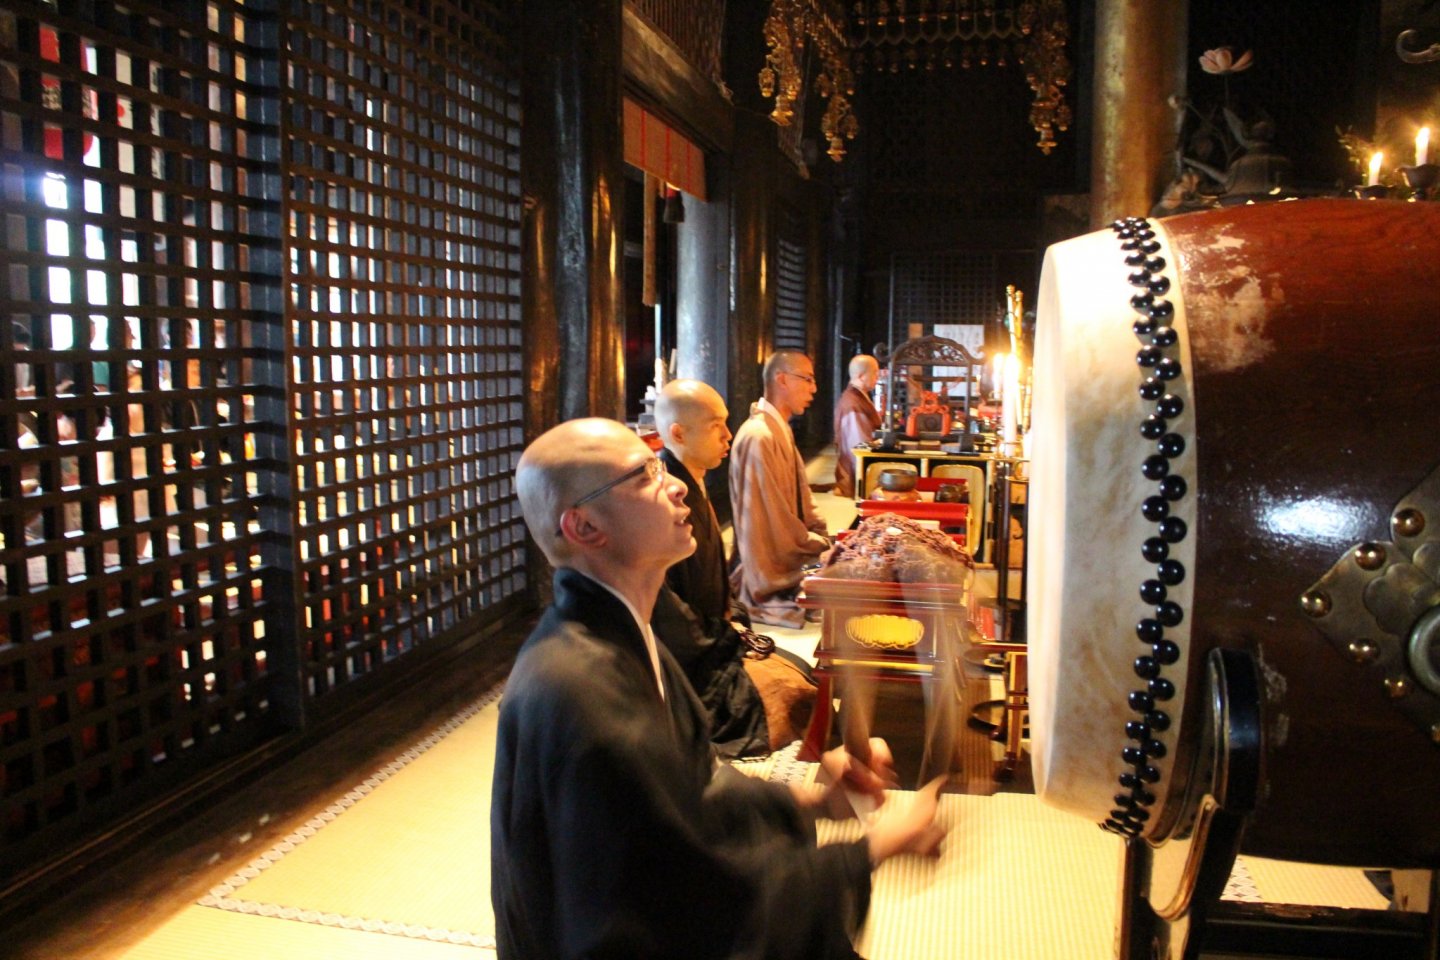 The Monks of Kinpusenji Temple during the Asaza Morning Service